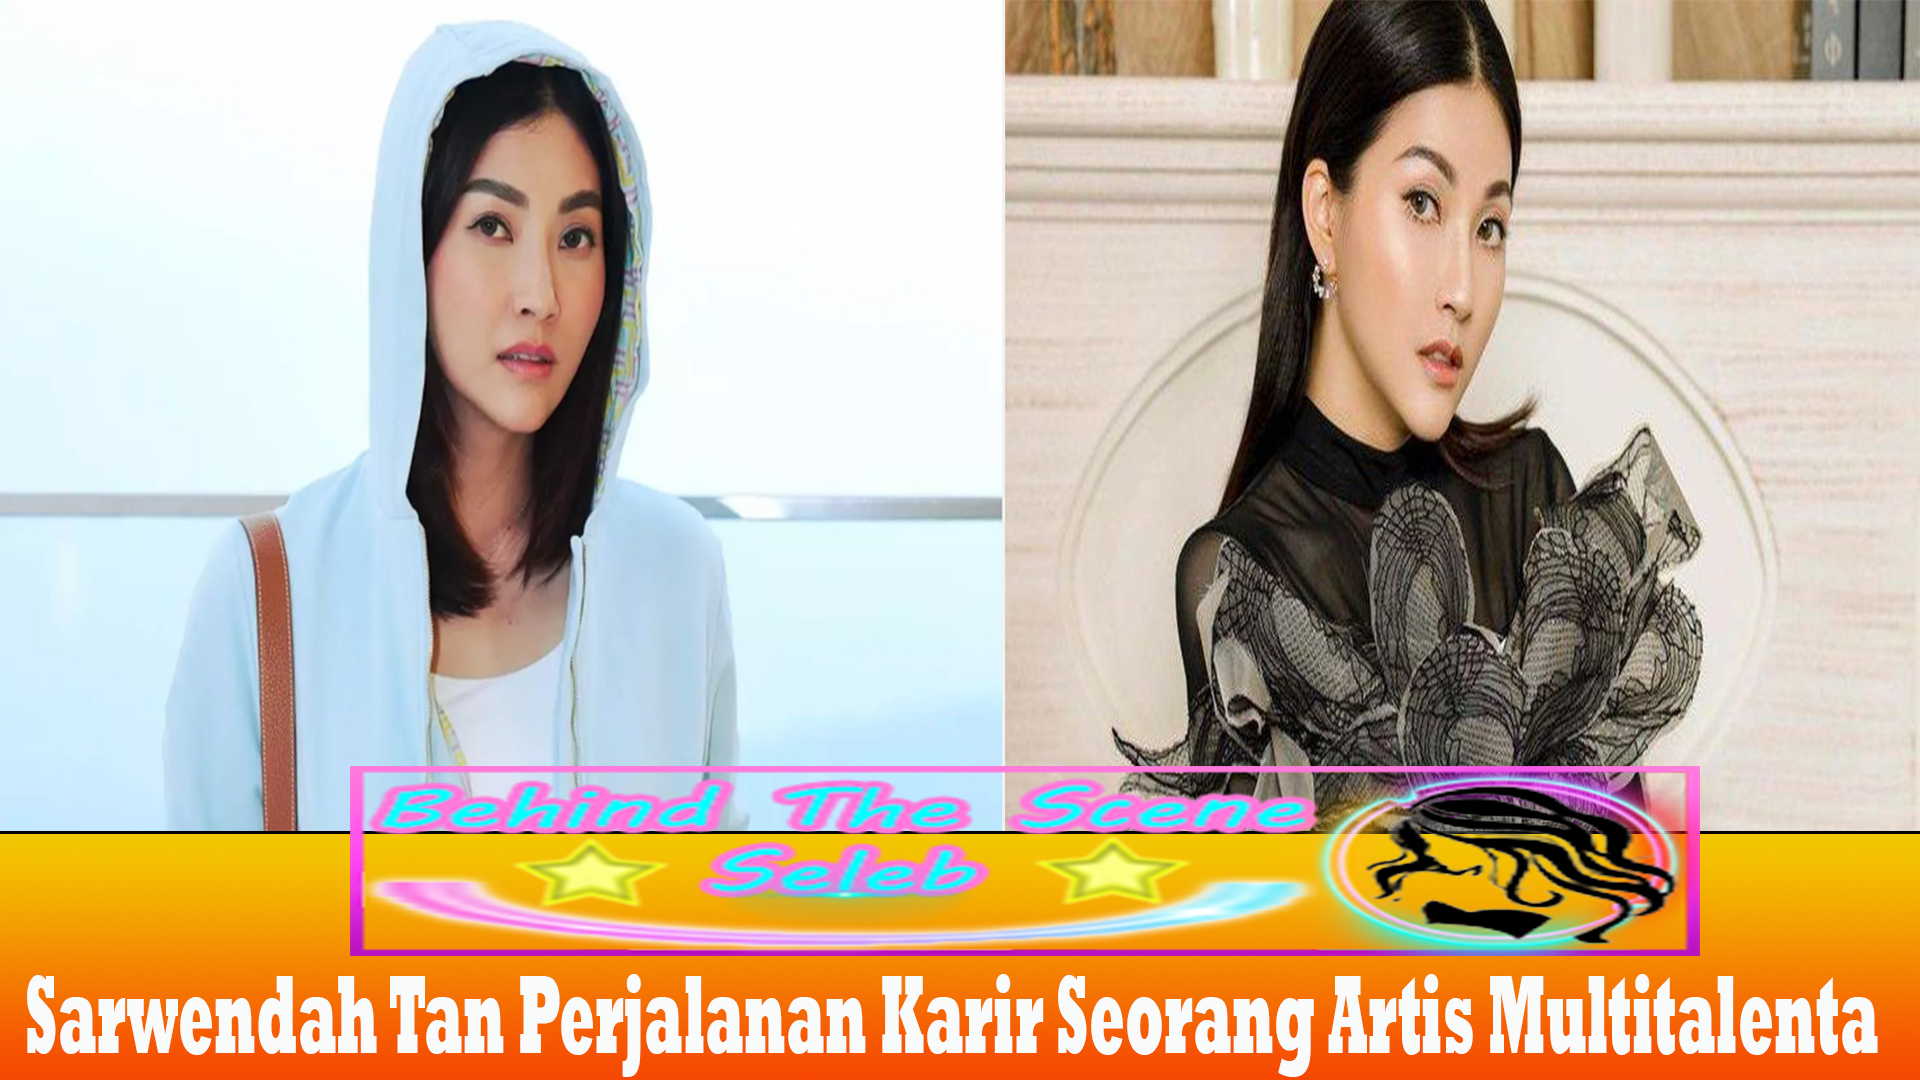 Sarwendah Tan Perjalanan Karir Seorang Artis Multitalenta